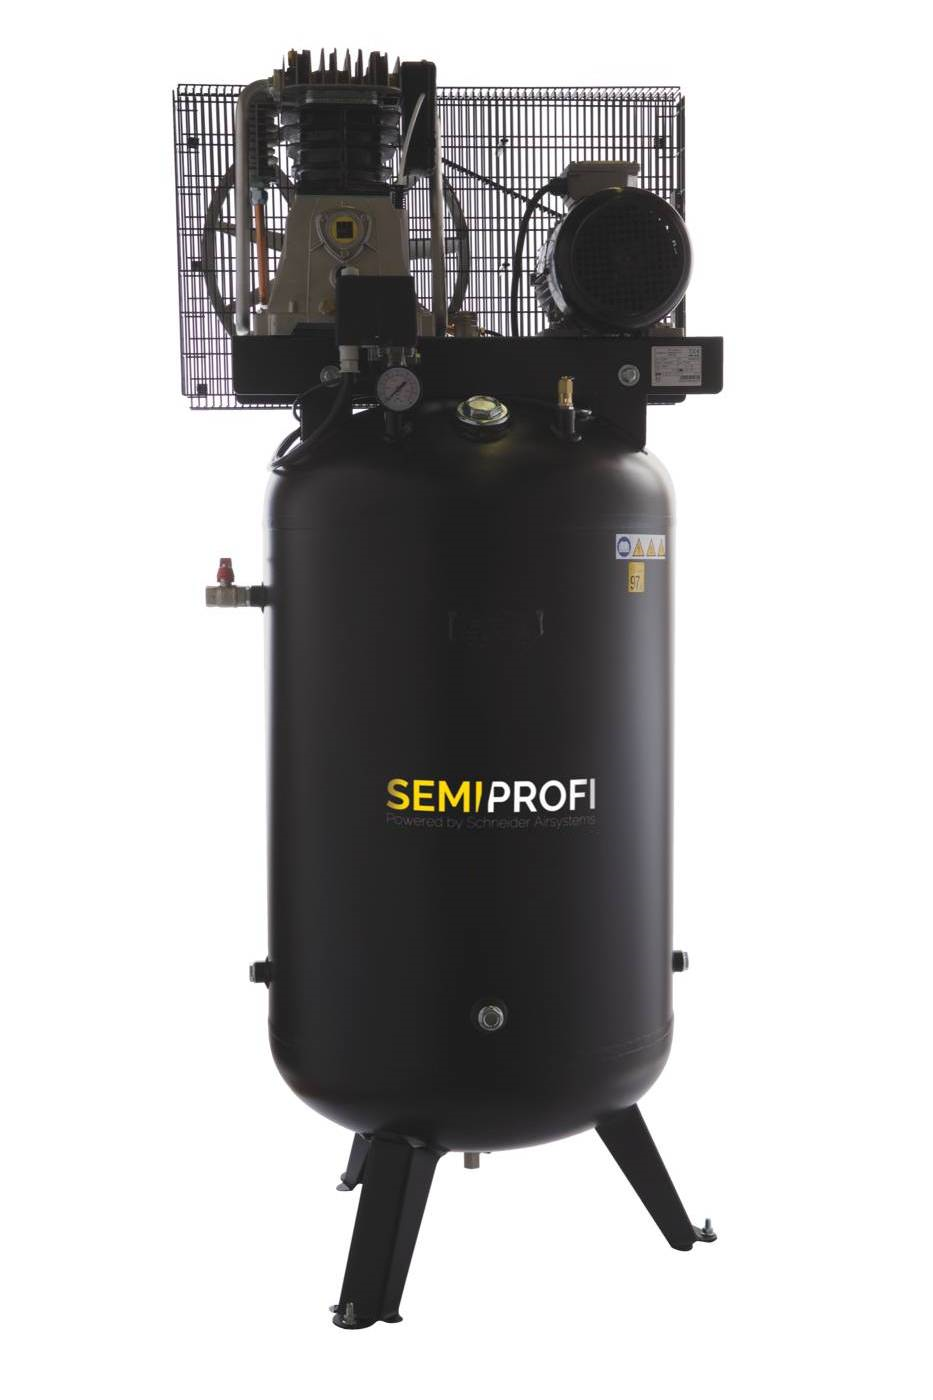 Schneider SEMI PROFI STS 830-10-500 D kompresor